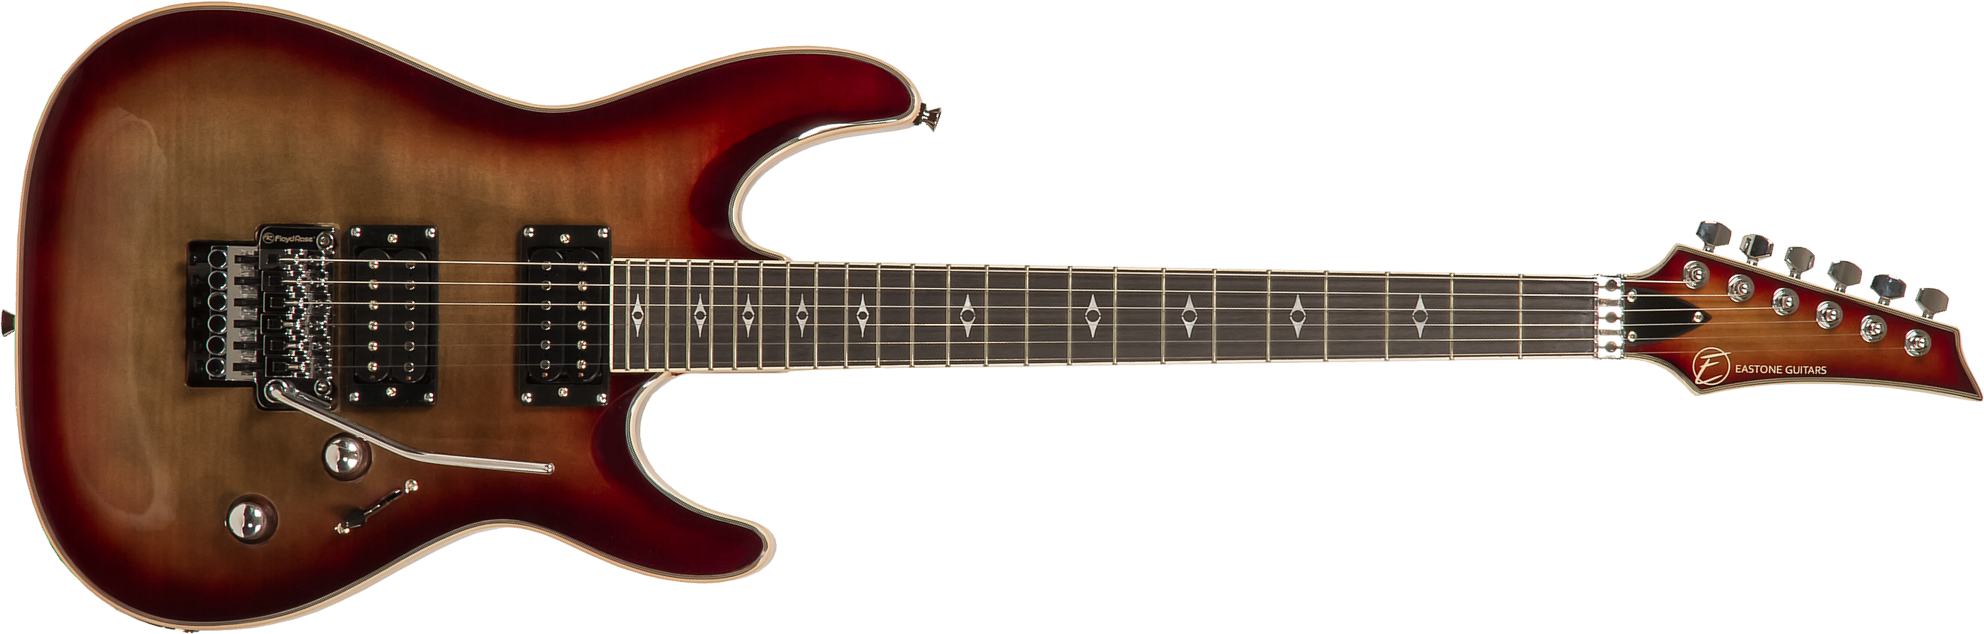 Eastone Metdc100 Hh Fr Pur - Black Flames - E-Gitarre in Str-Form - Main picture